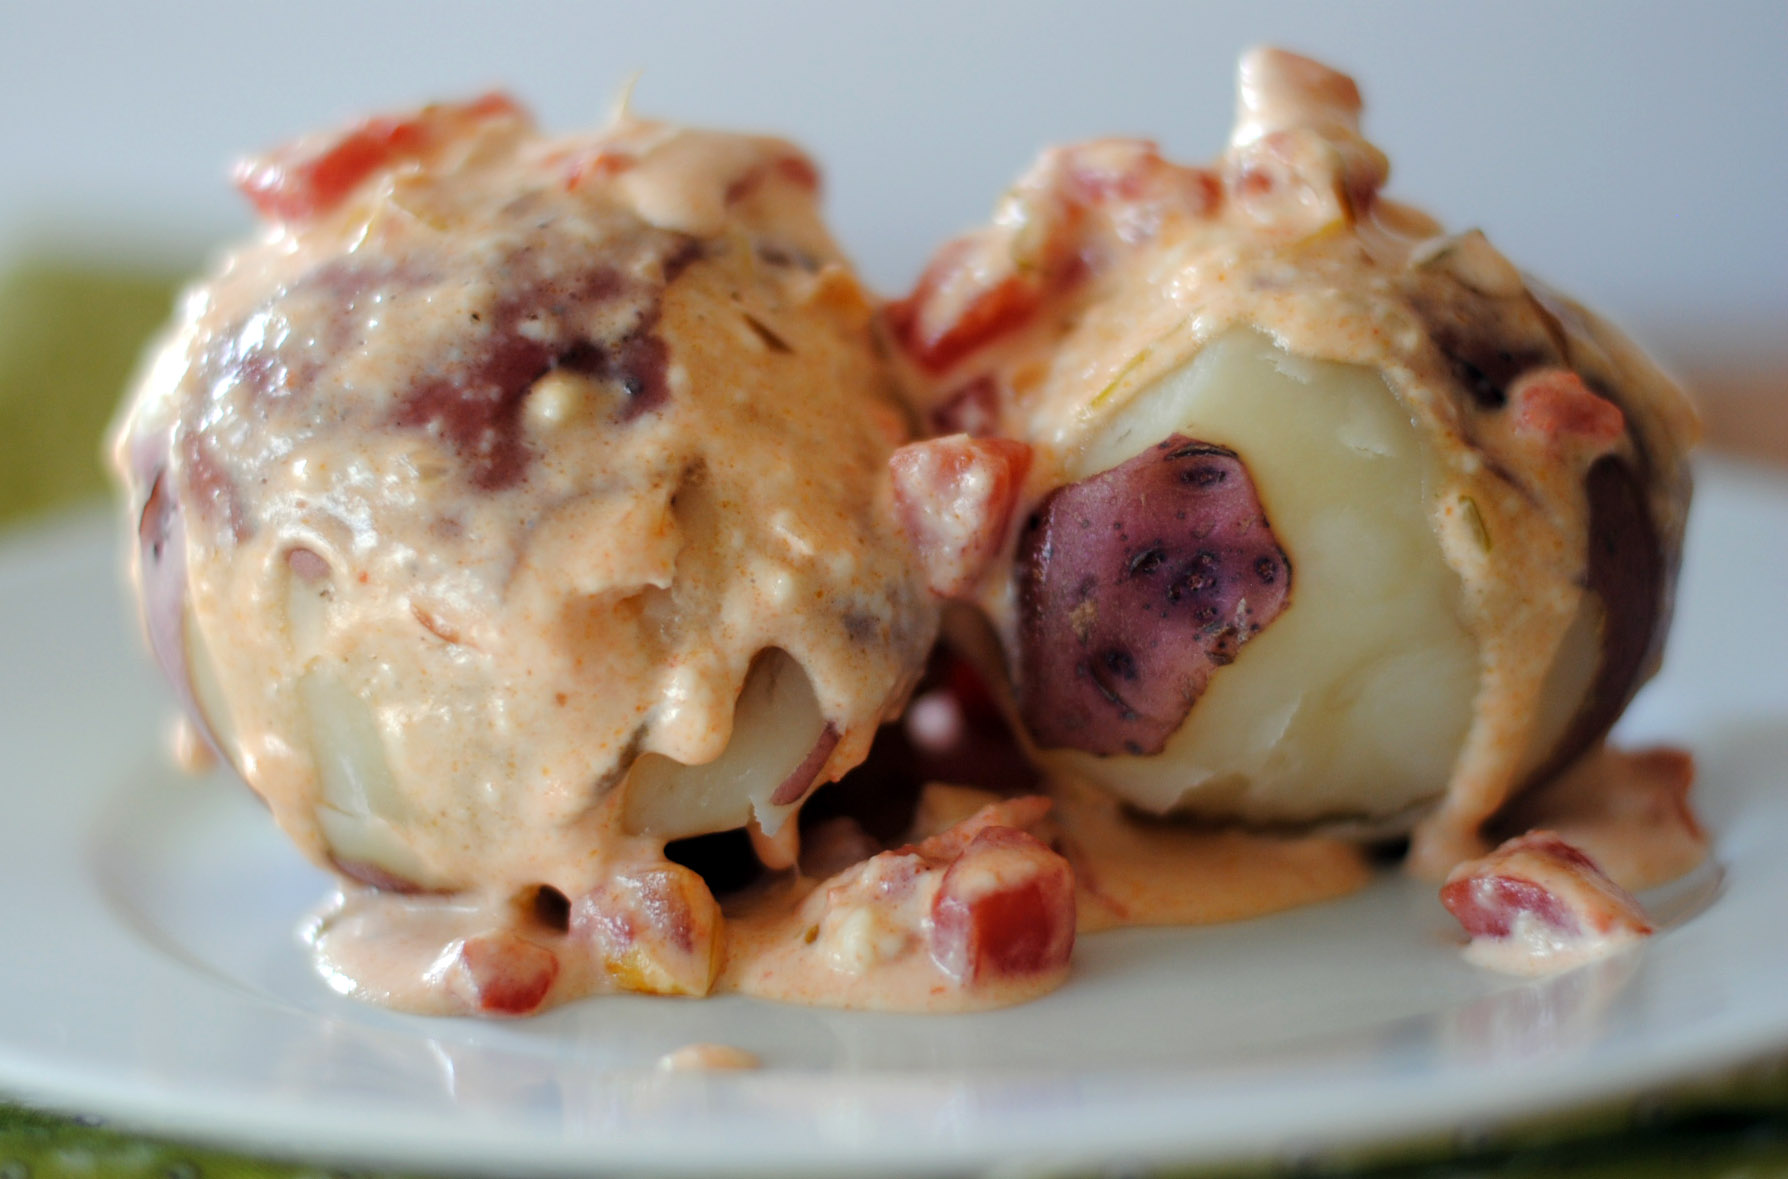 Papas Chorreadas (Potatoes Drizzled With A Cheese & Tomato Sauce)